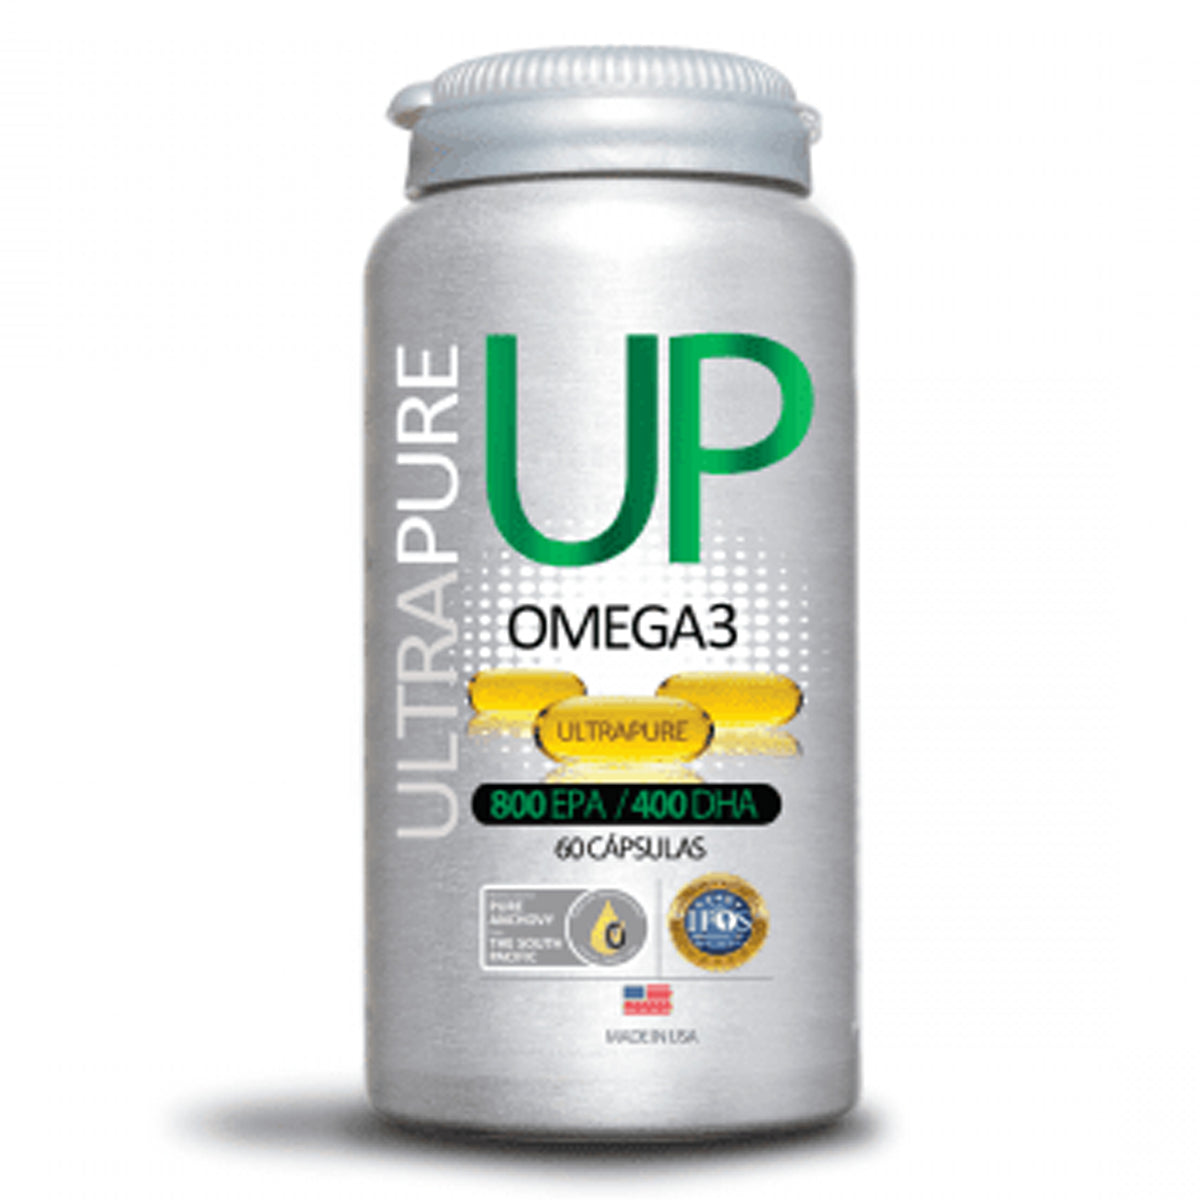 Omega 3 UP Cápsulas